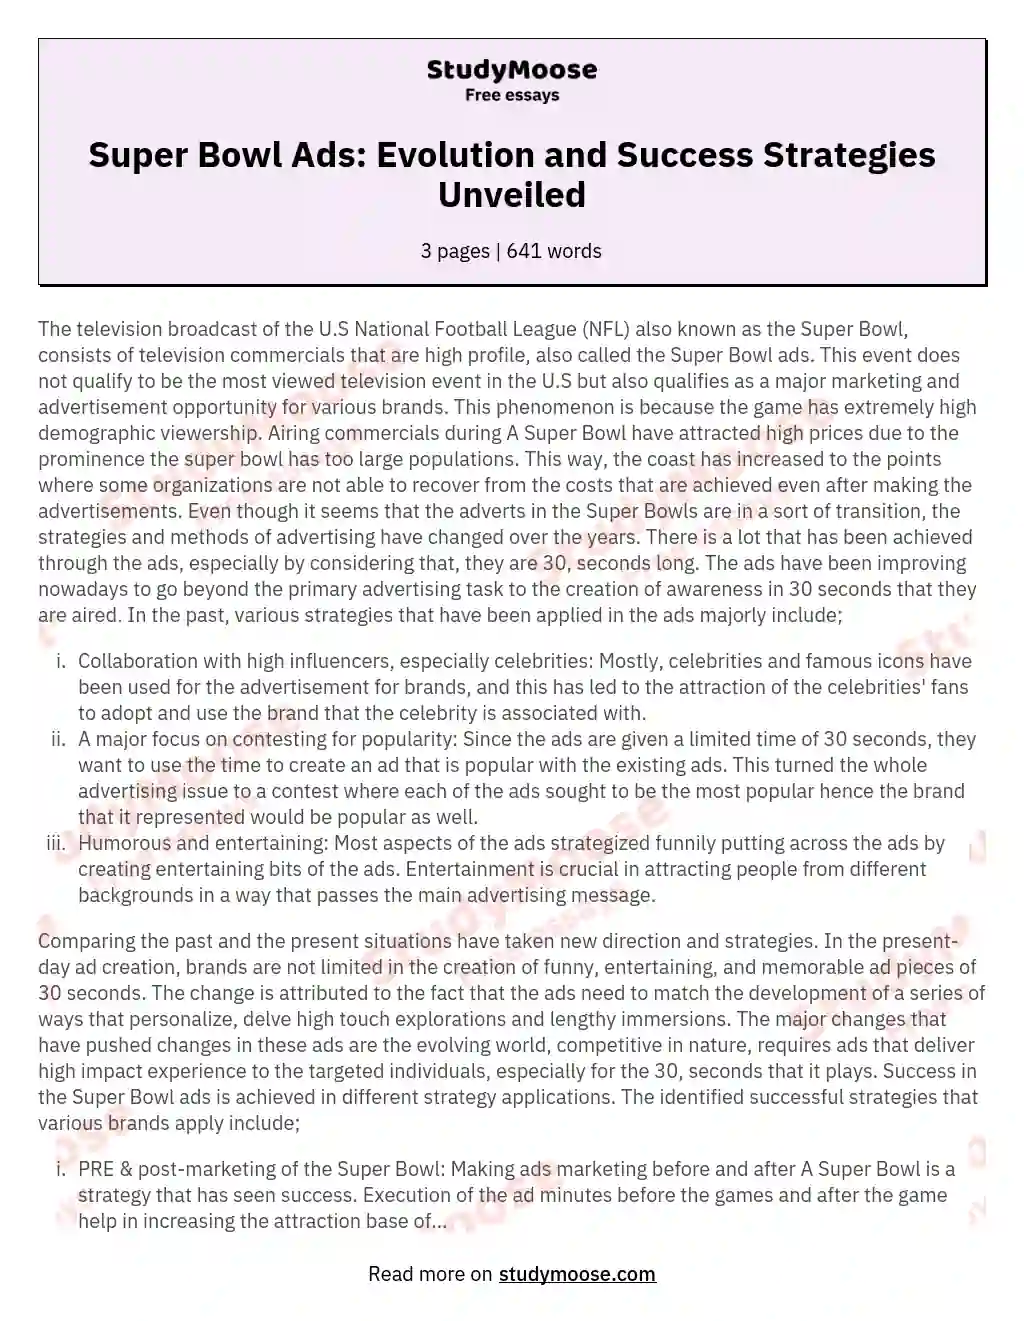 Super Bowl Ads: Evolution and Success Strategies Unveiled essay